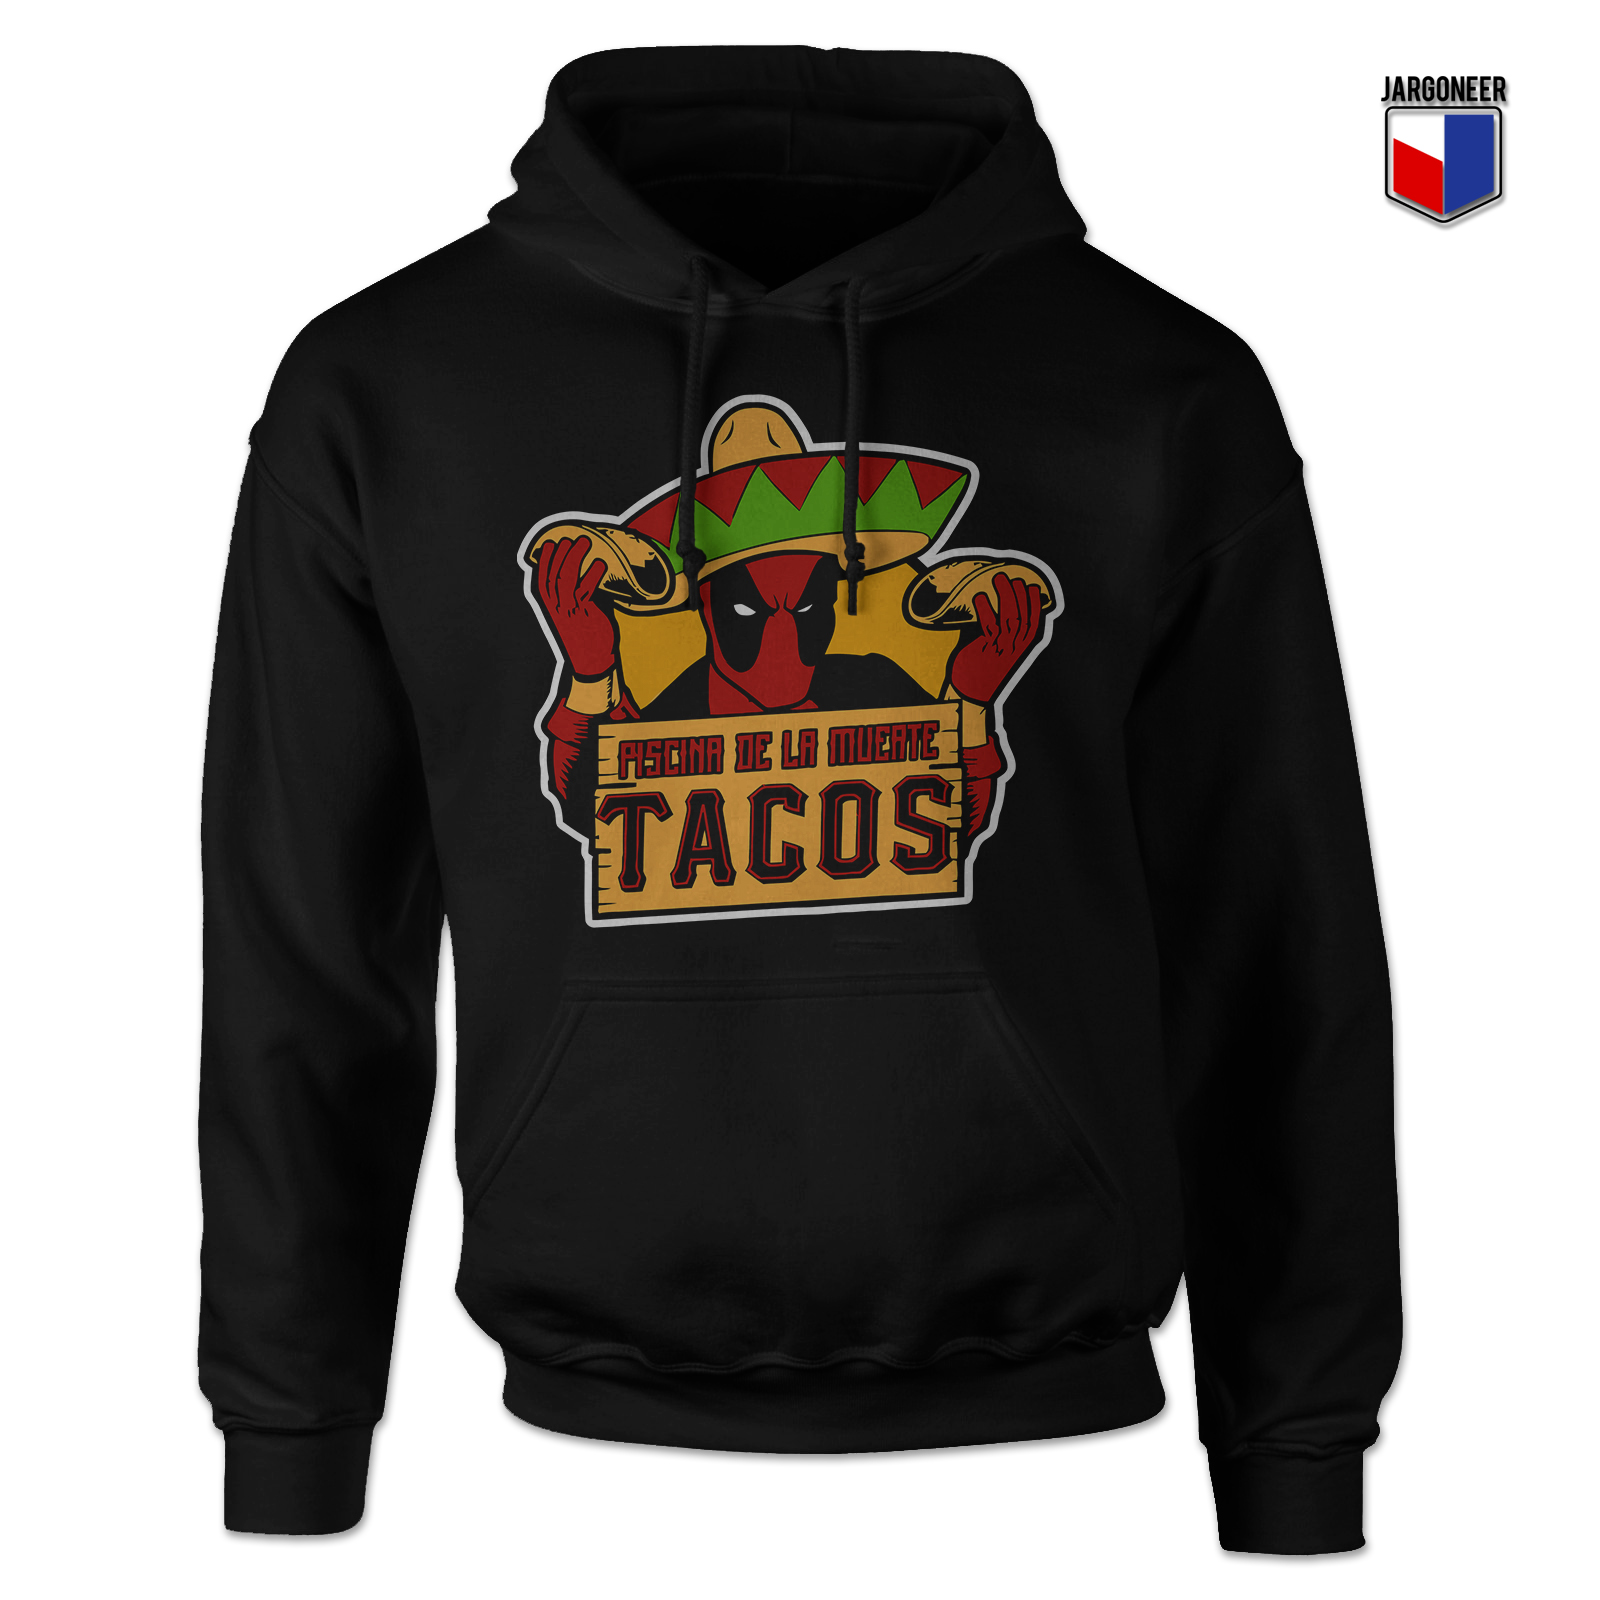 Dead Tacos Black Hoody - Shop Unique Graphic Cool Shirt Designs